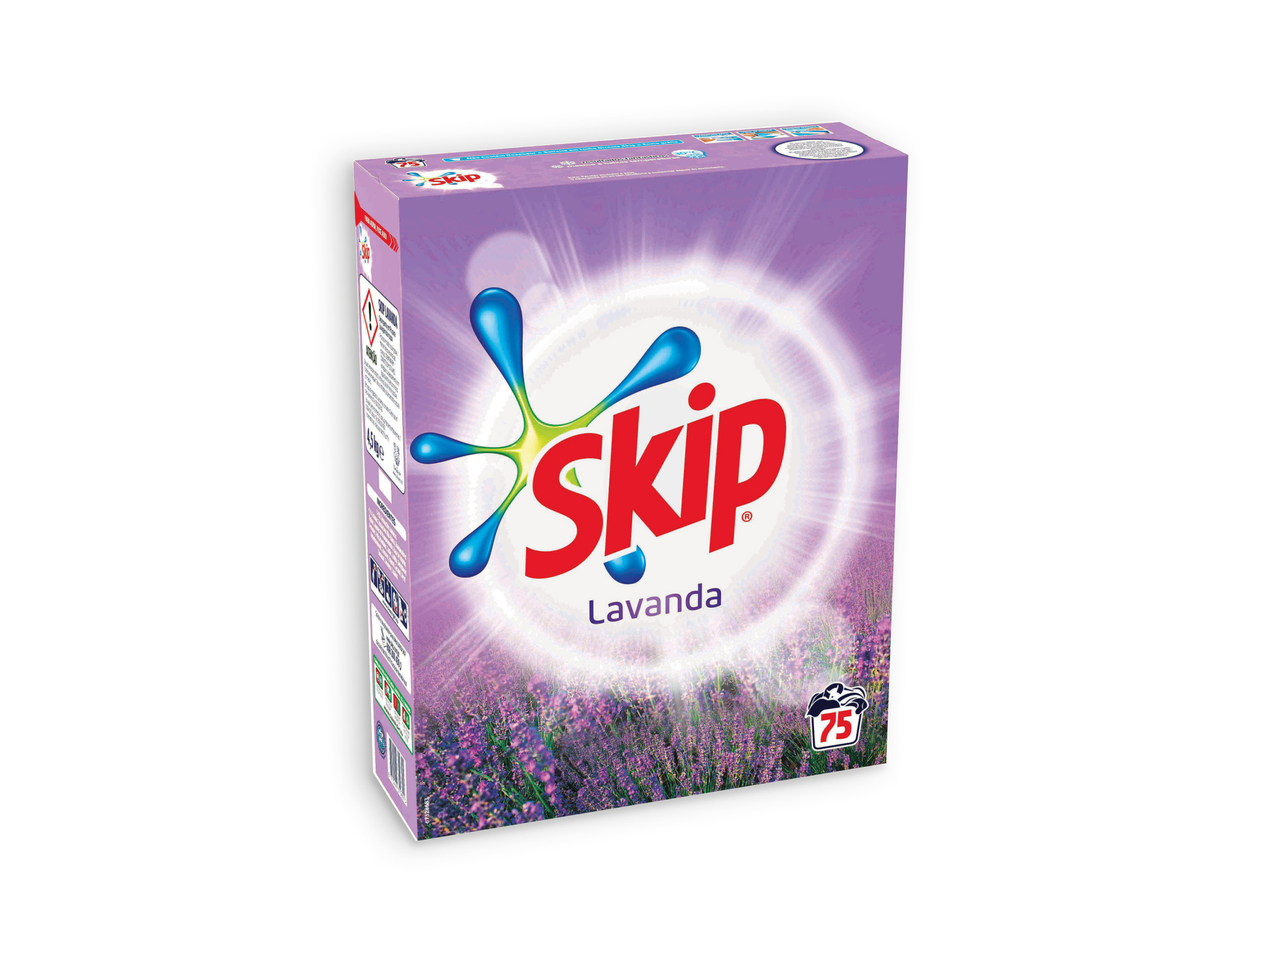 SKIP(R) Detergente em Pó Lavanda